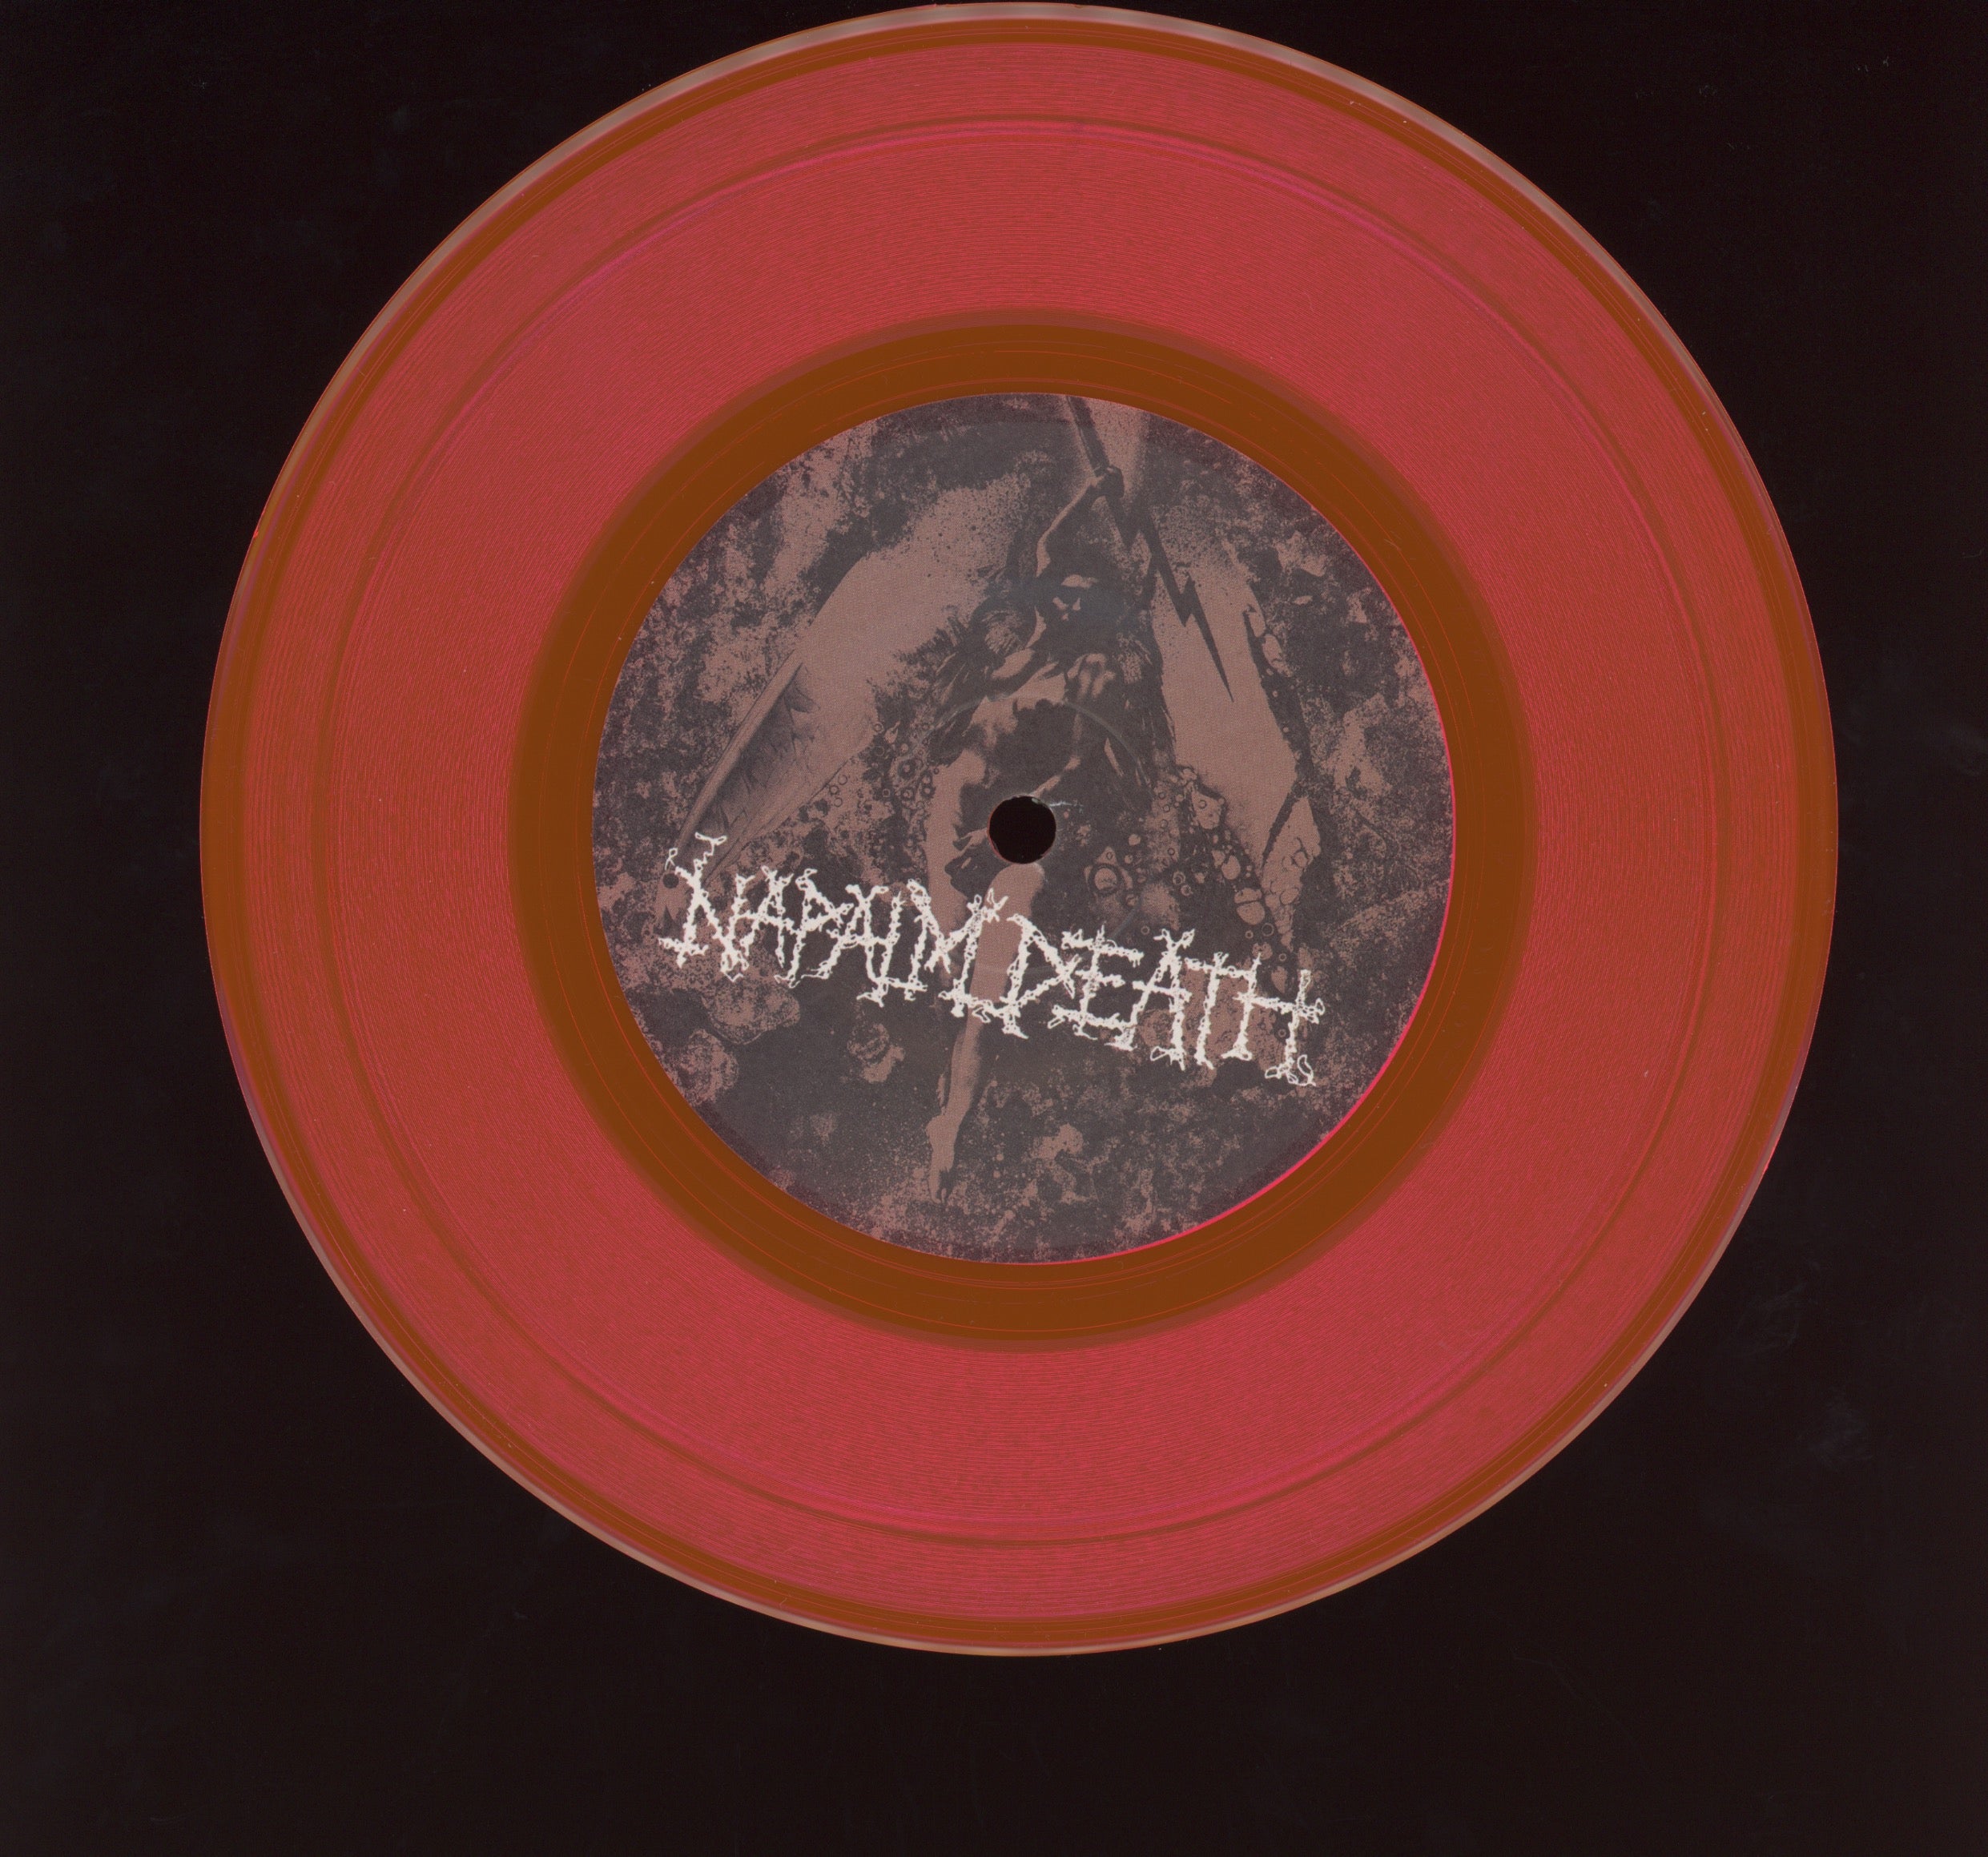 Converge / Napalm Death - Self Released Pink Fluorescent Split 7"